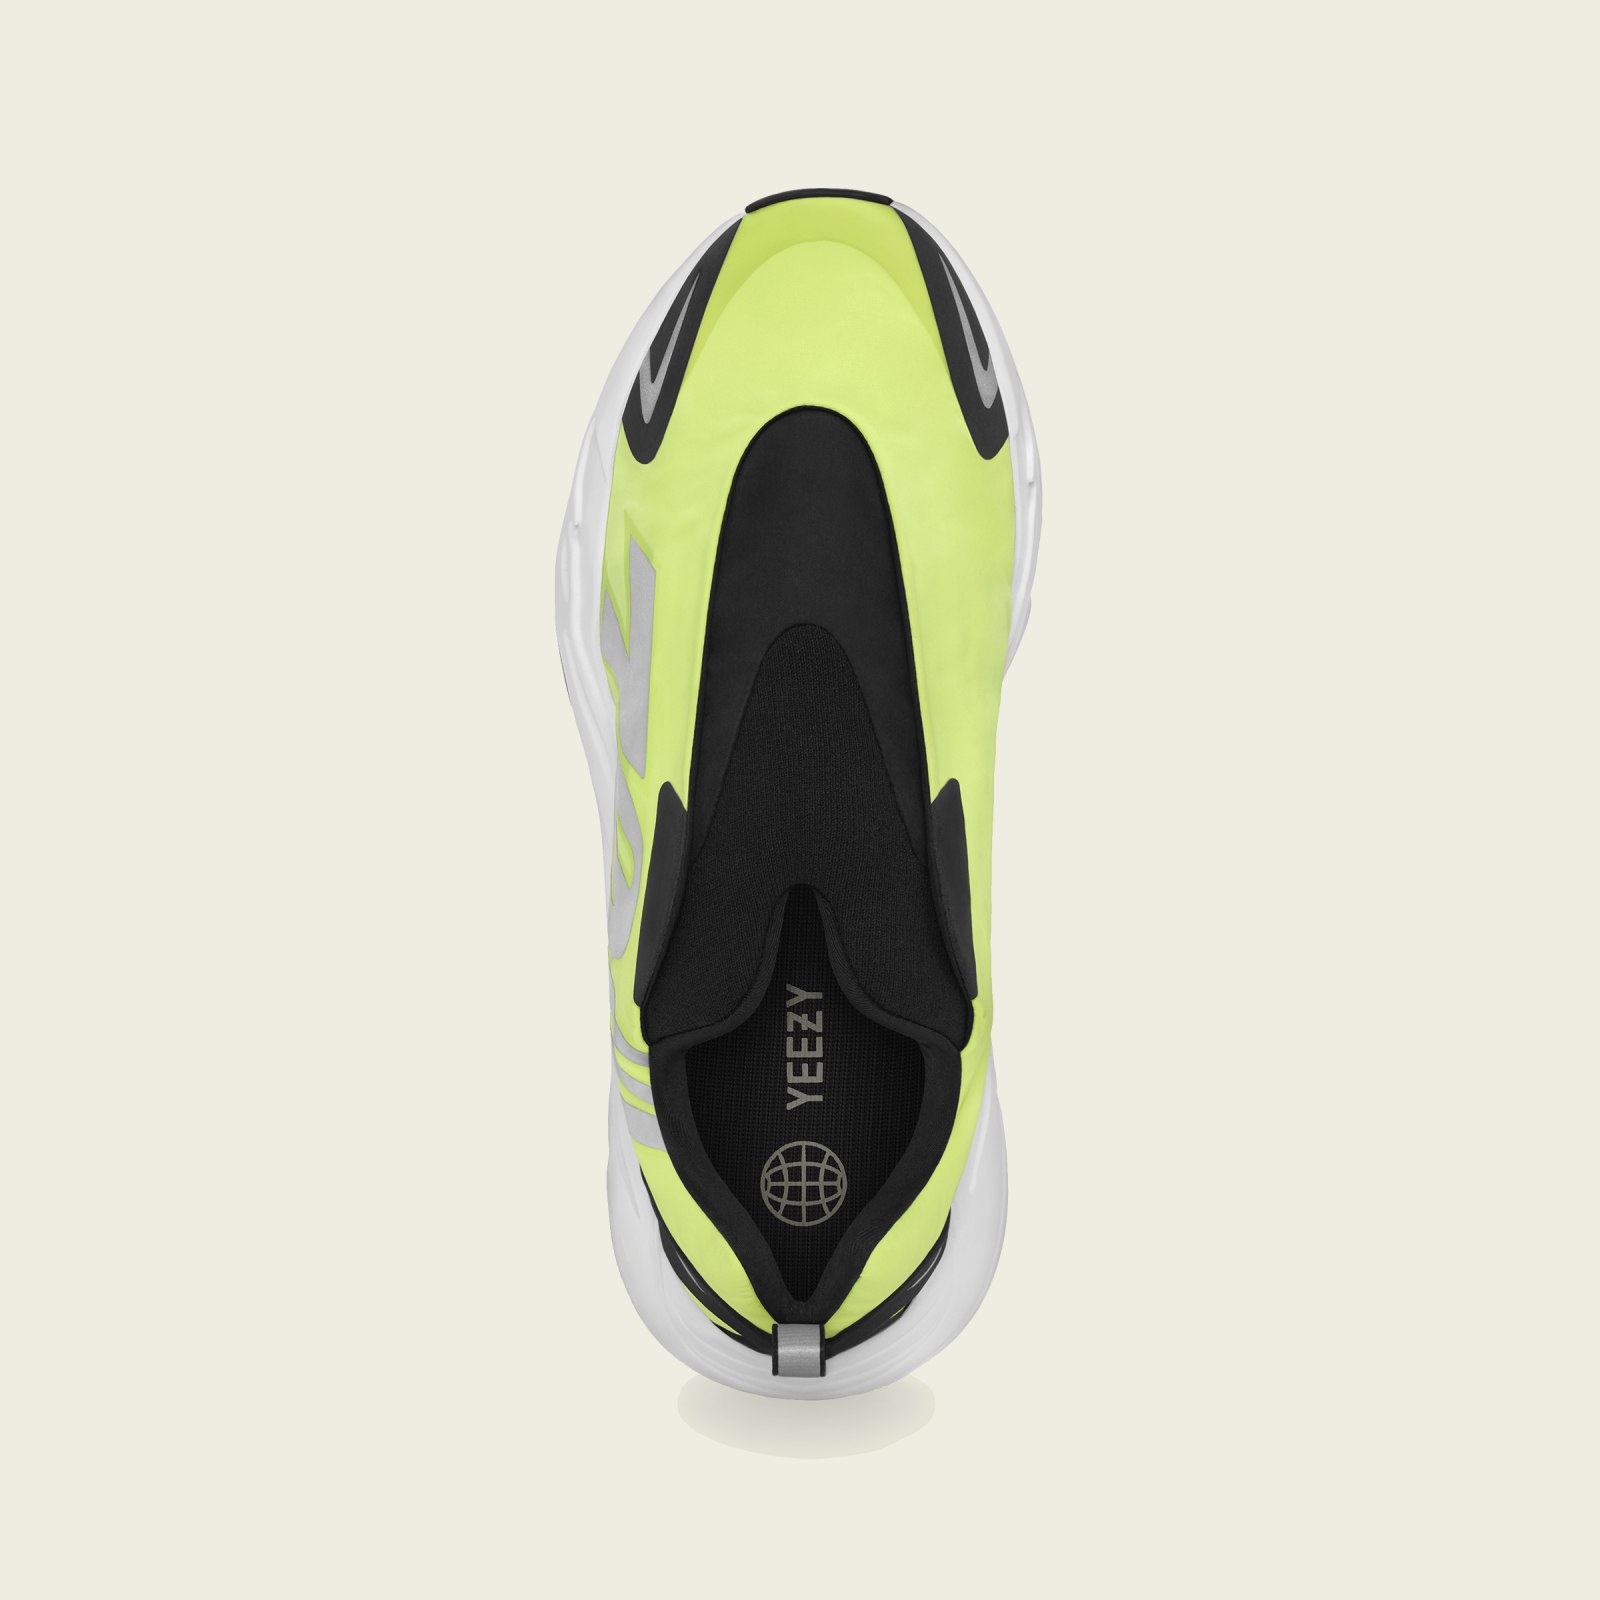 Adidas Yeezy Boost 700
MNVN Laceless
« Phosphor »